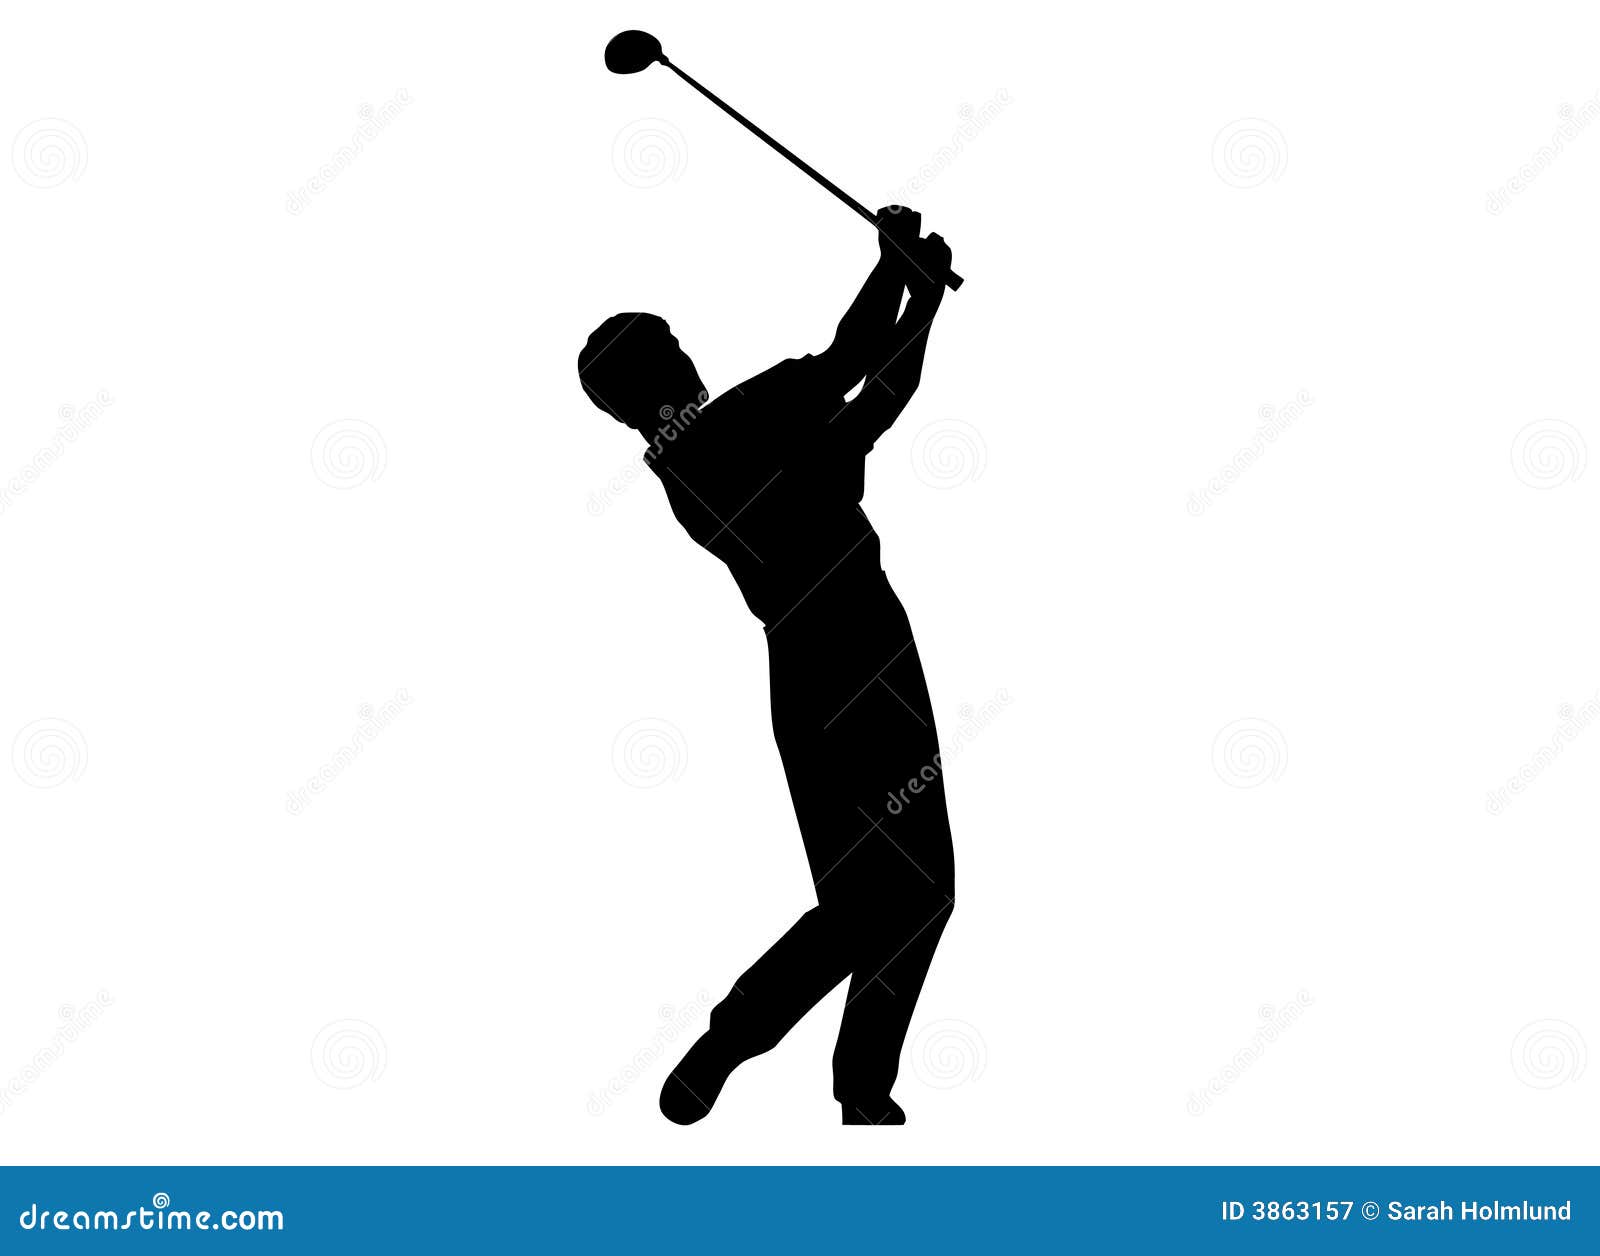 free clipart golf swing - photo #36